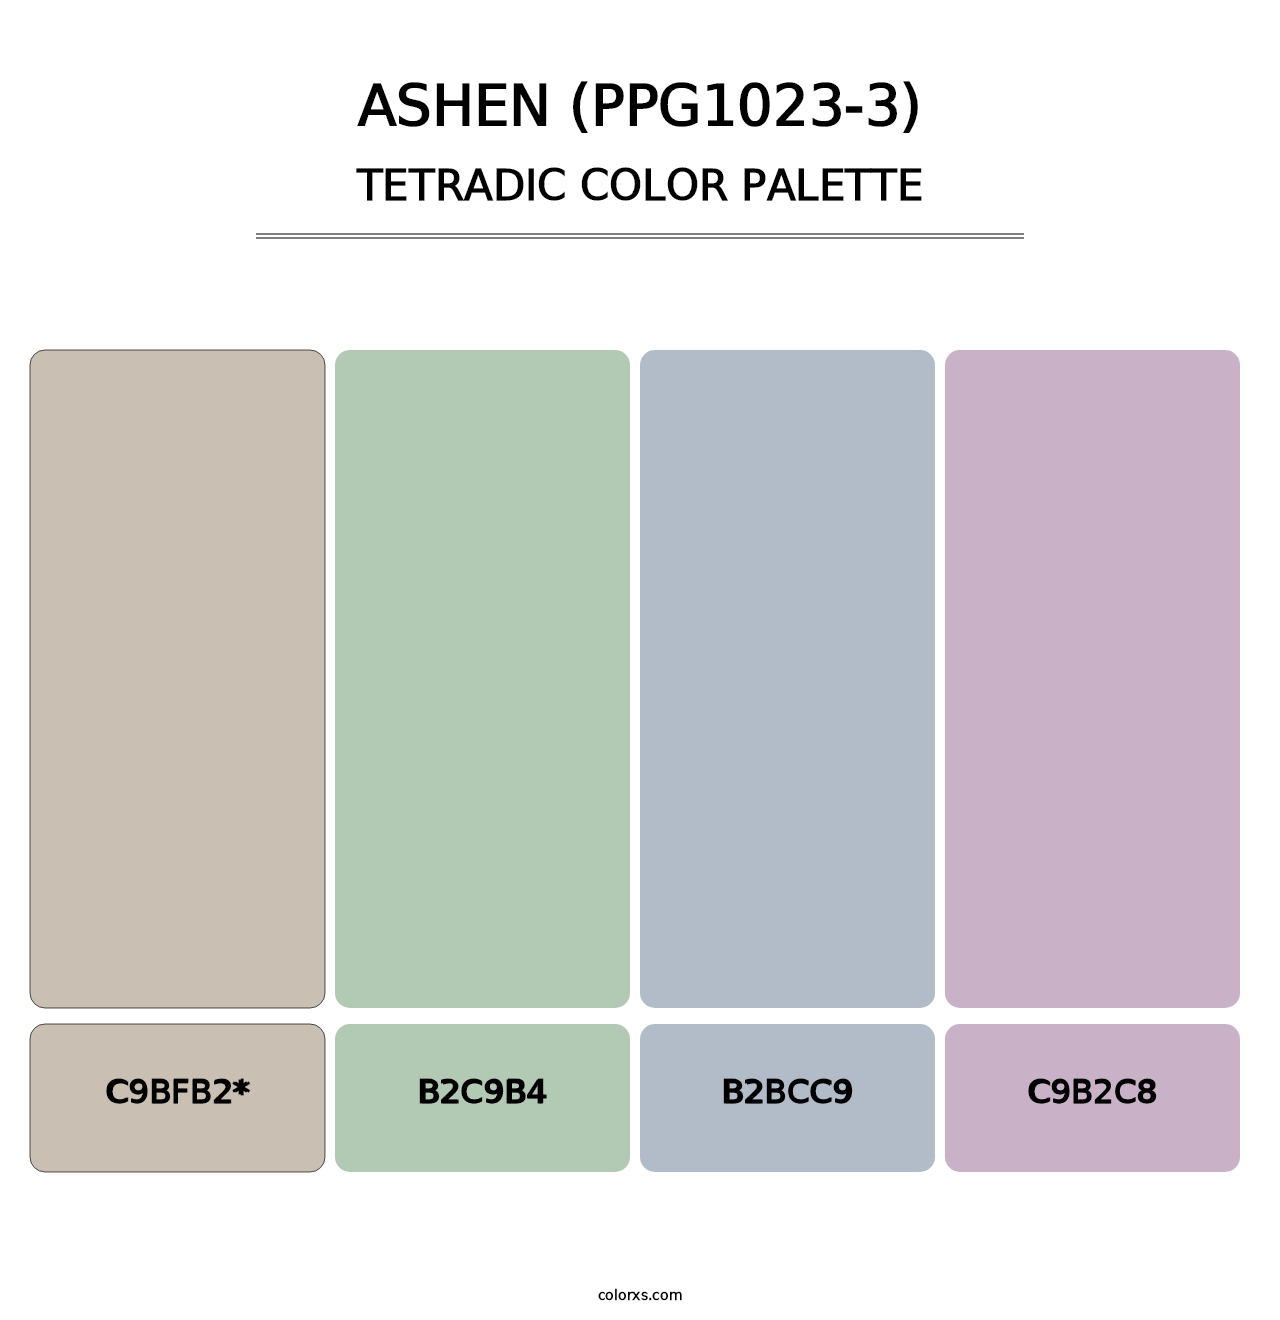 Ashen (PPG1023-3) - Tetradic Color Palette